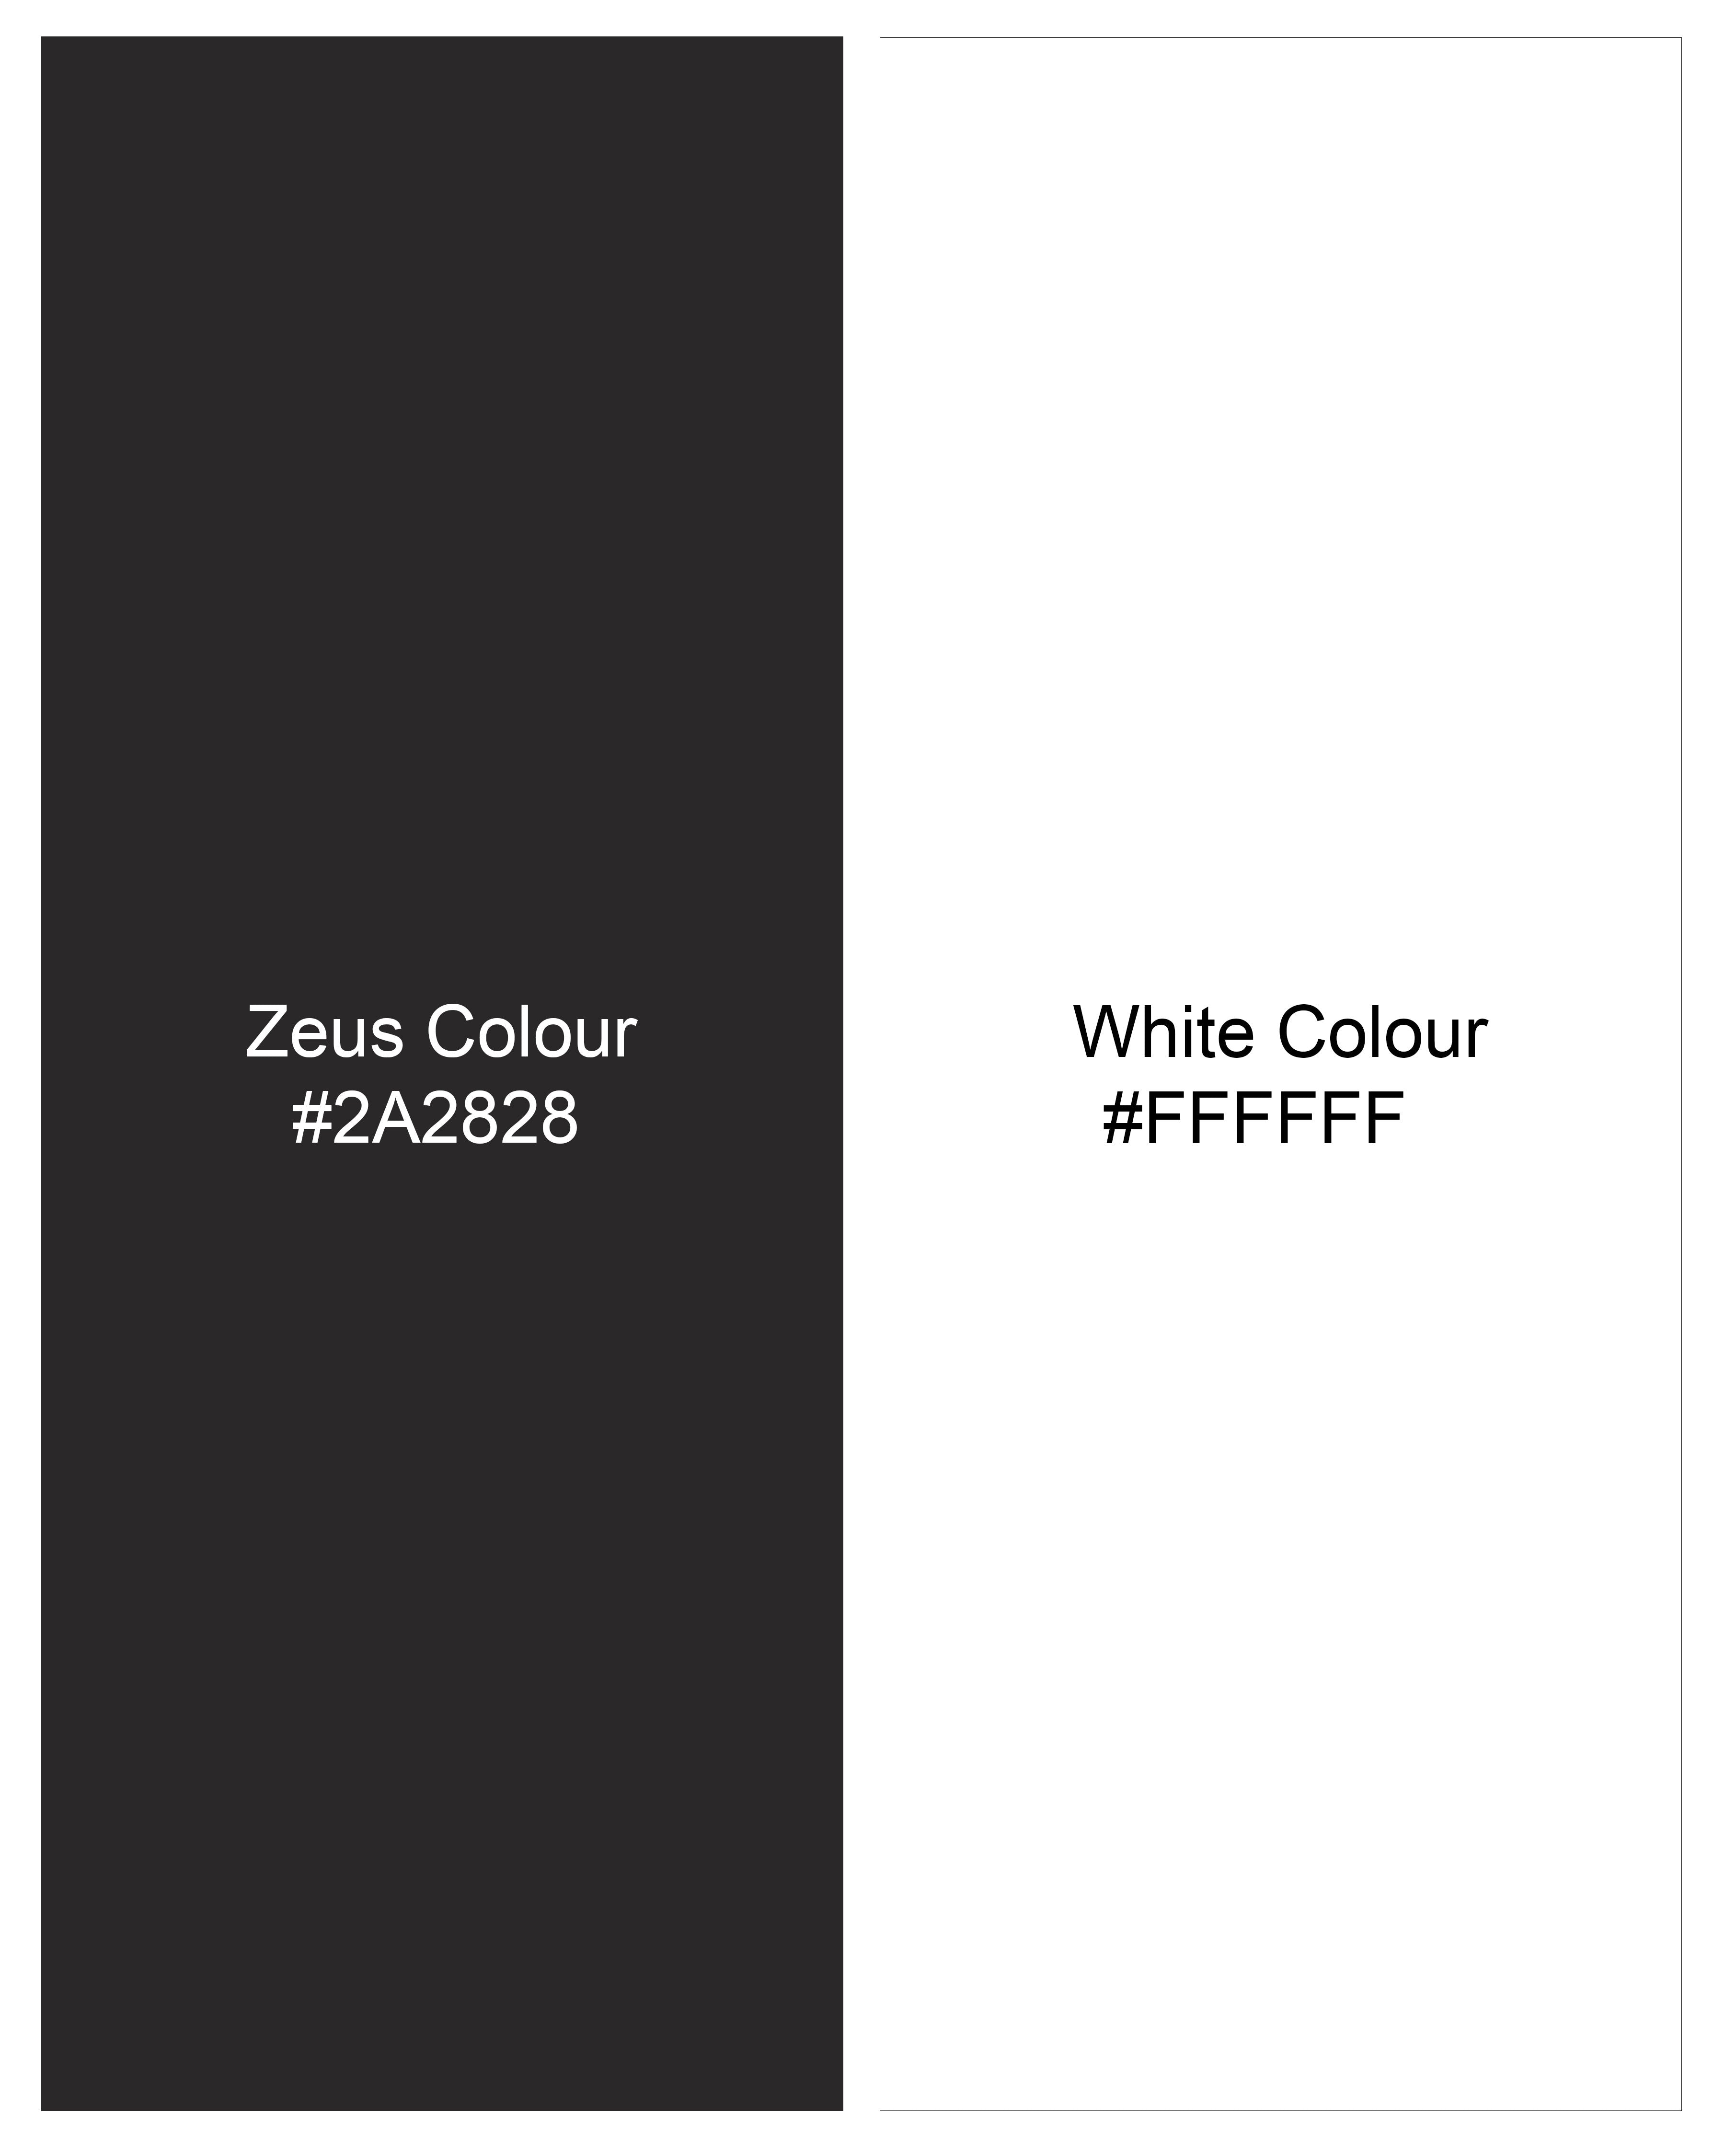 Zeus Black with White Striped Designer Breasted Suit ST2377-D237-36, ST2377-D237-38, ST2377-D237-40, ST2377-D237-42, ST2377-D237-44, ST2377-D237-46, ST2377-D237-48, ST2377-D237-50, ST2377-D237-52, ST2377-D237-54, ST2377-D237-56, ST2377-D237-58, ST2377-D237-60